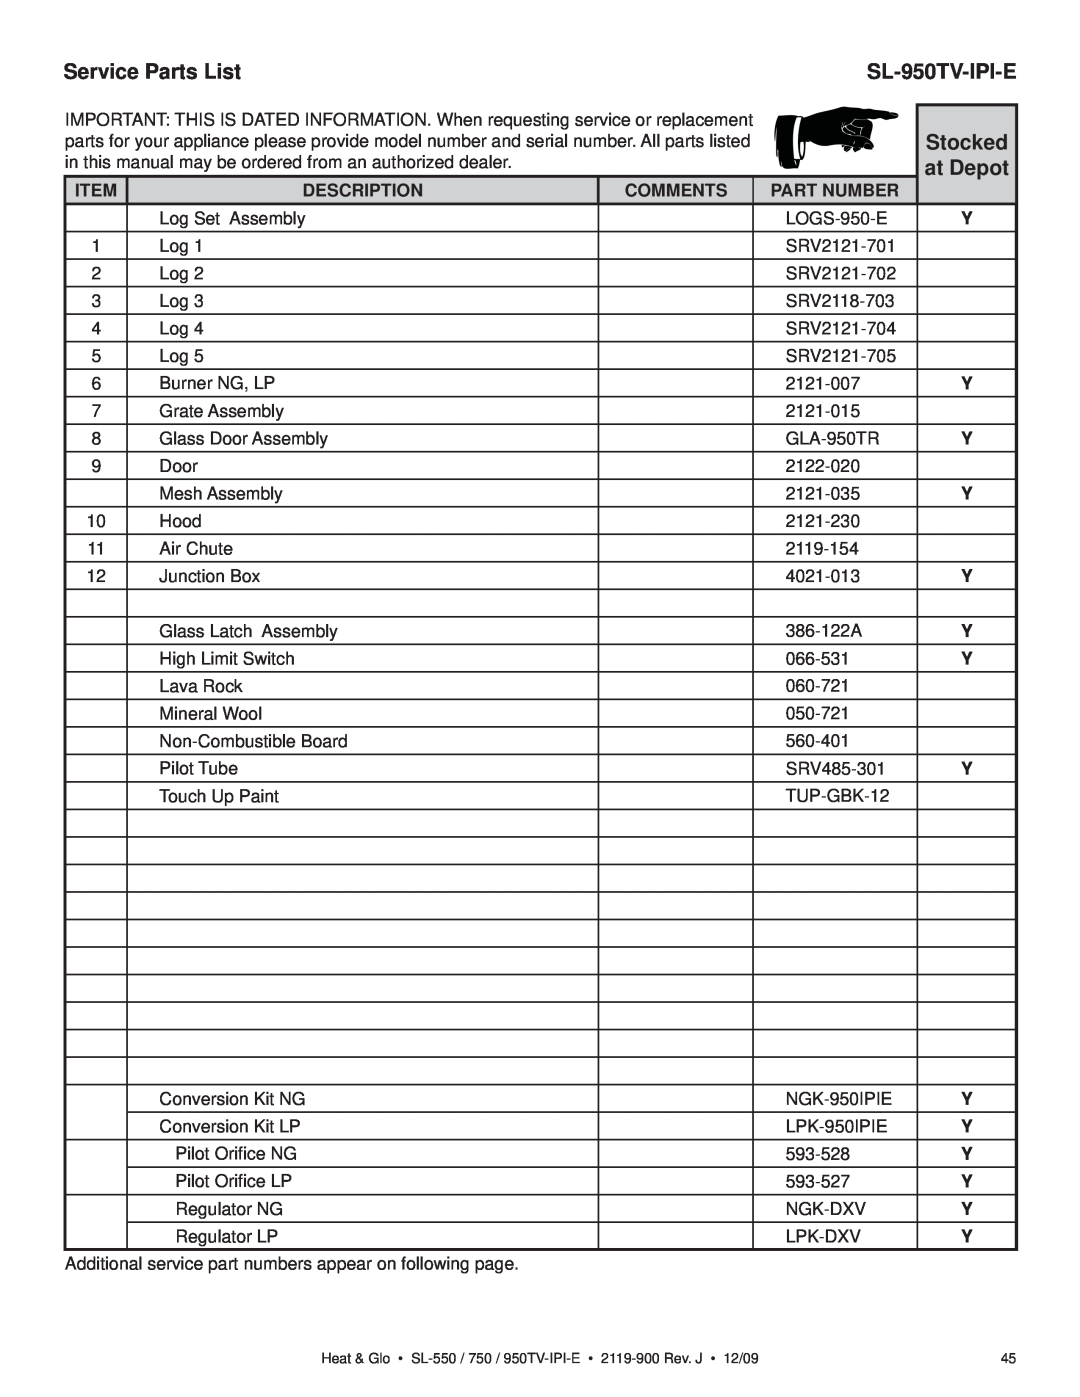 Heat & Glo LifeStyle SL-950TV-IPI-E owner manual Stocked, Service Parts List, at Depot, Description, Comments, Part Number 